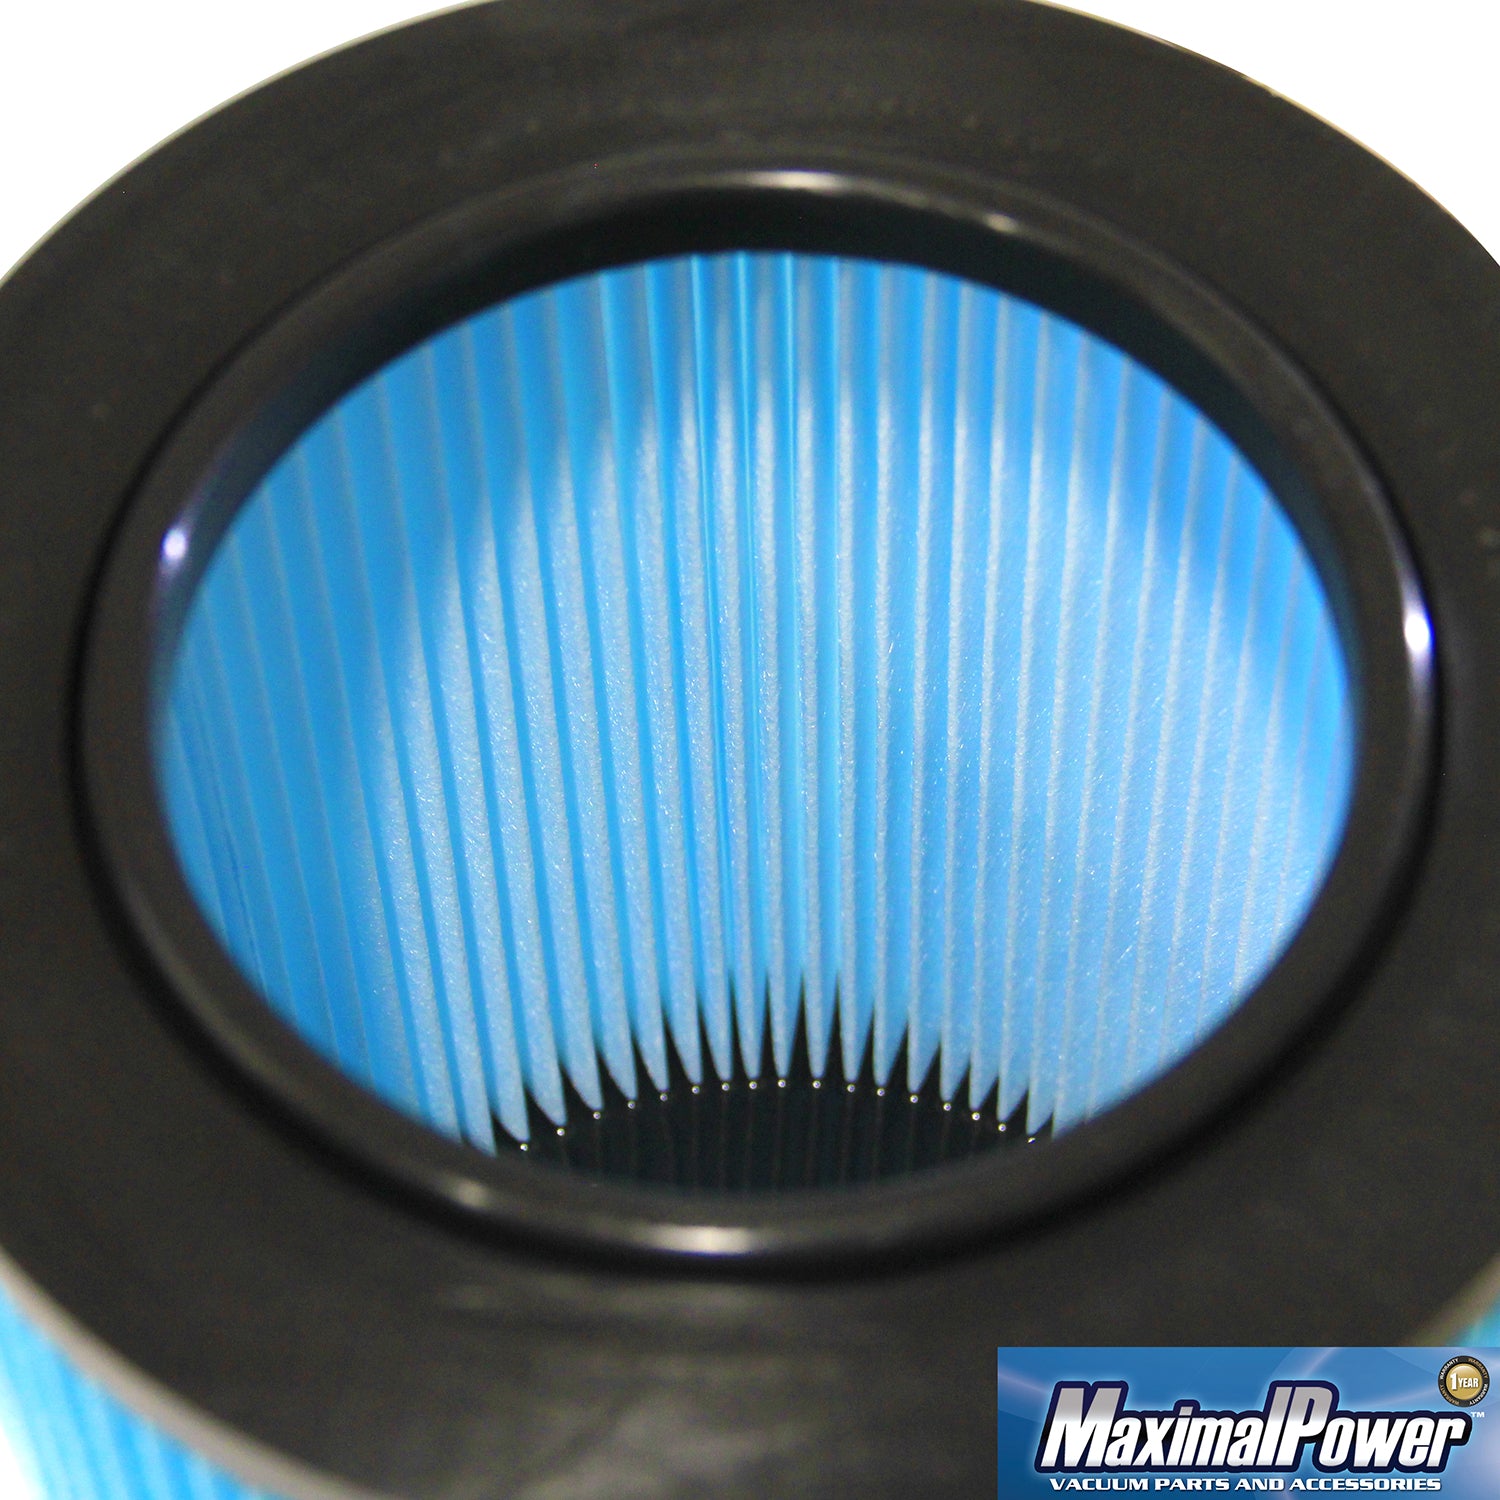 MaximalPower Replacement Filter for Black & Decker Hand Vacuum